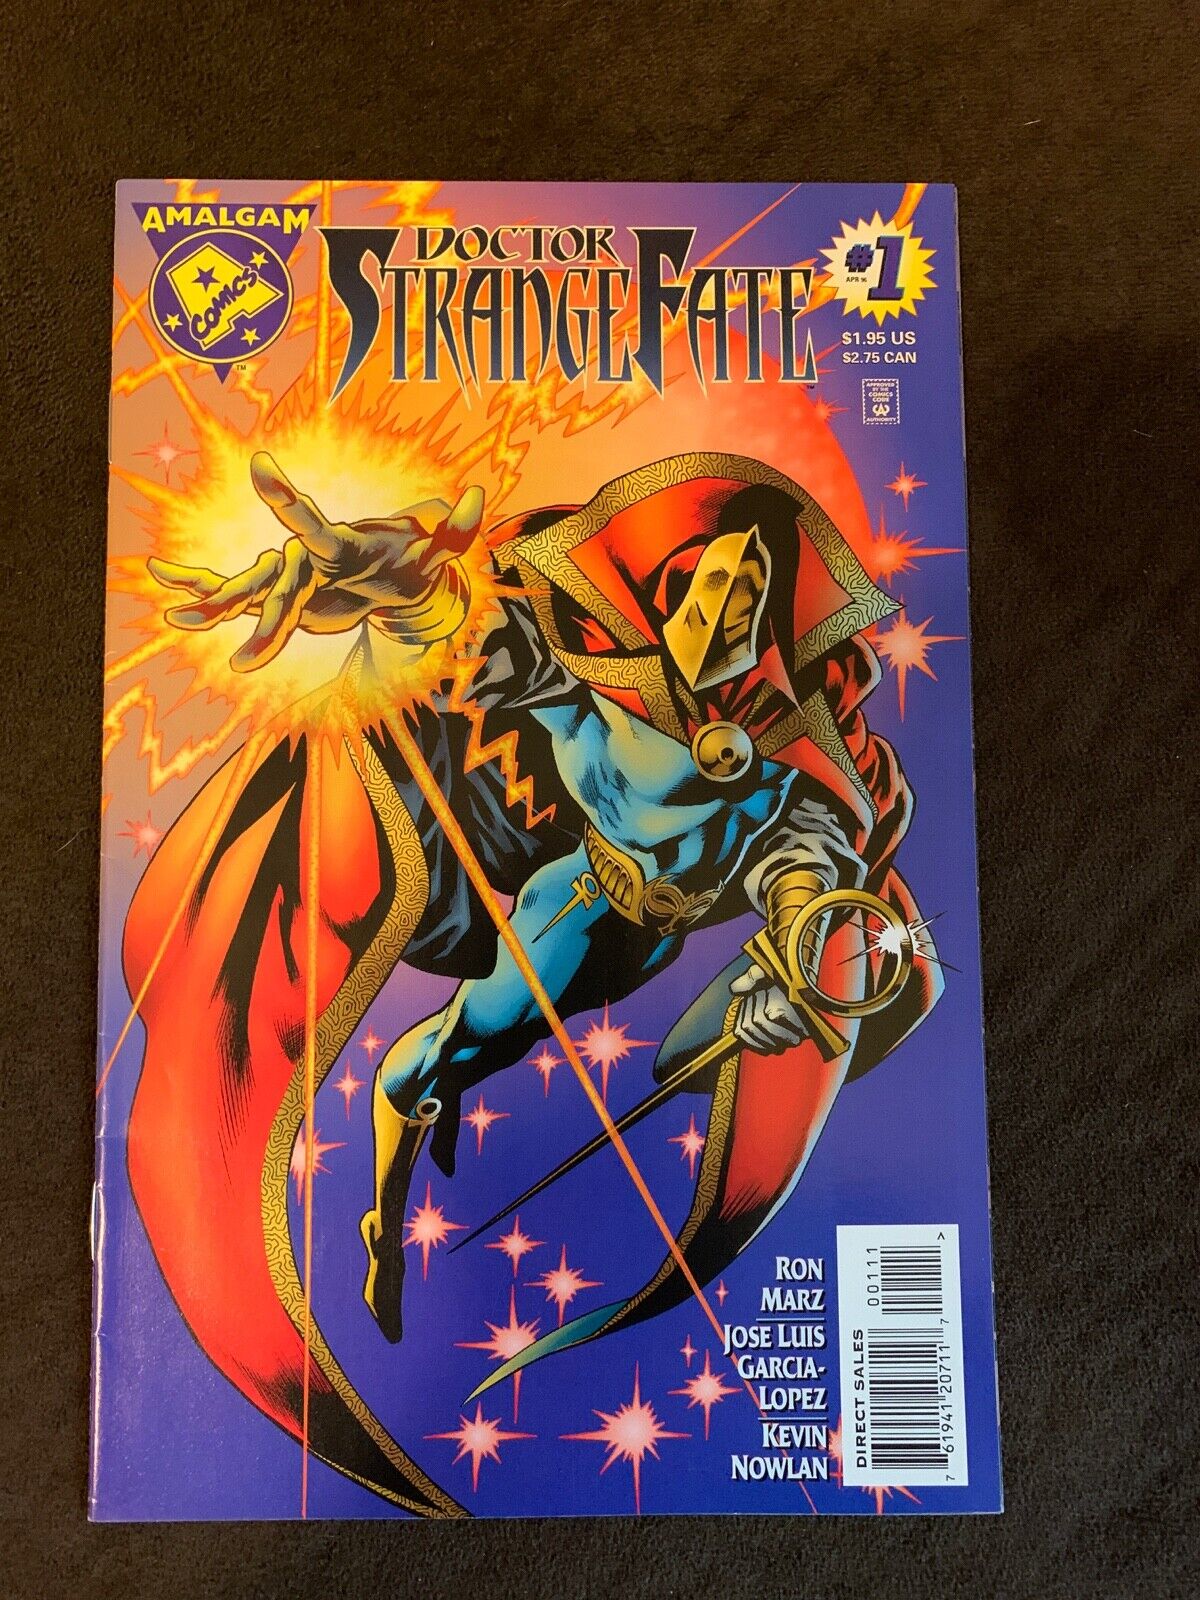 Doctor StrangeFate #1 Amalgam Comics (1996) VF+